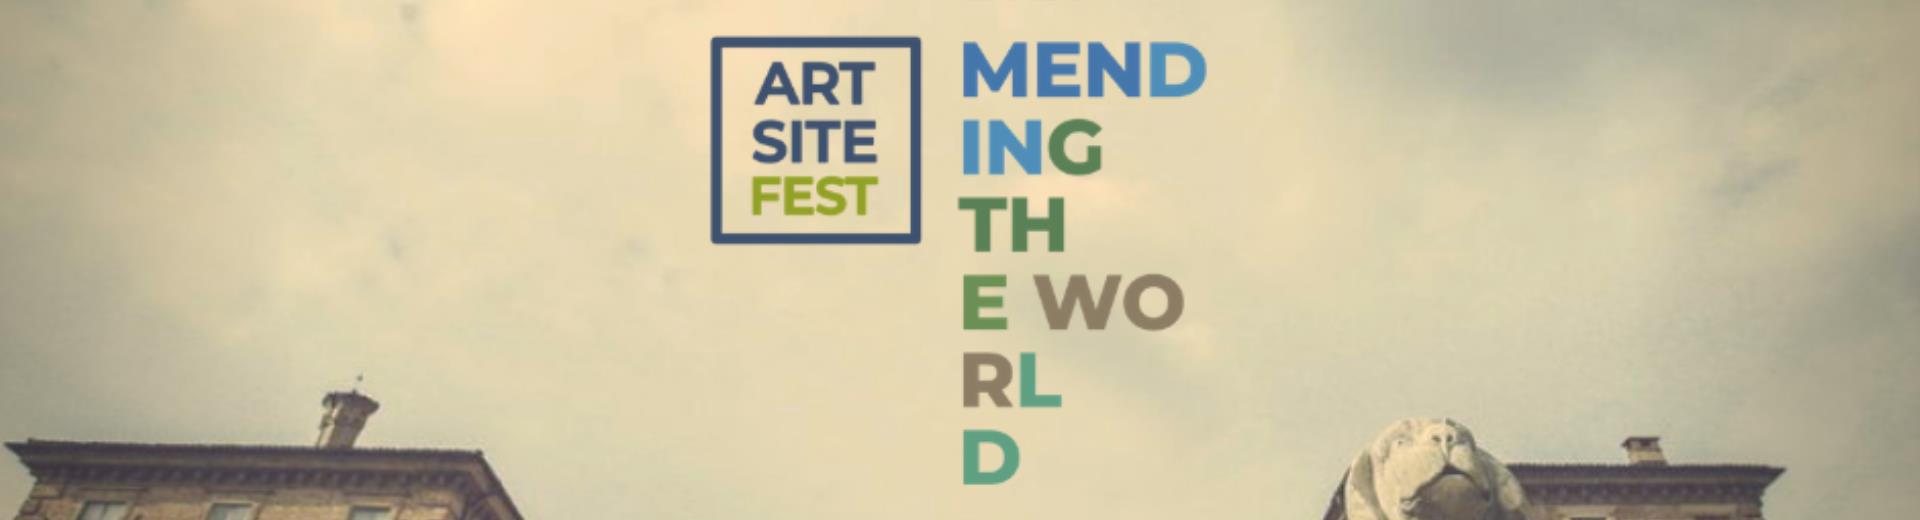 Art Site Fest 2020